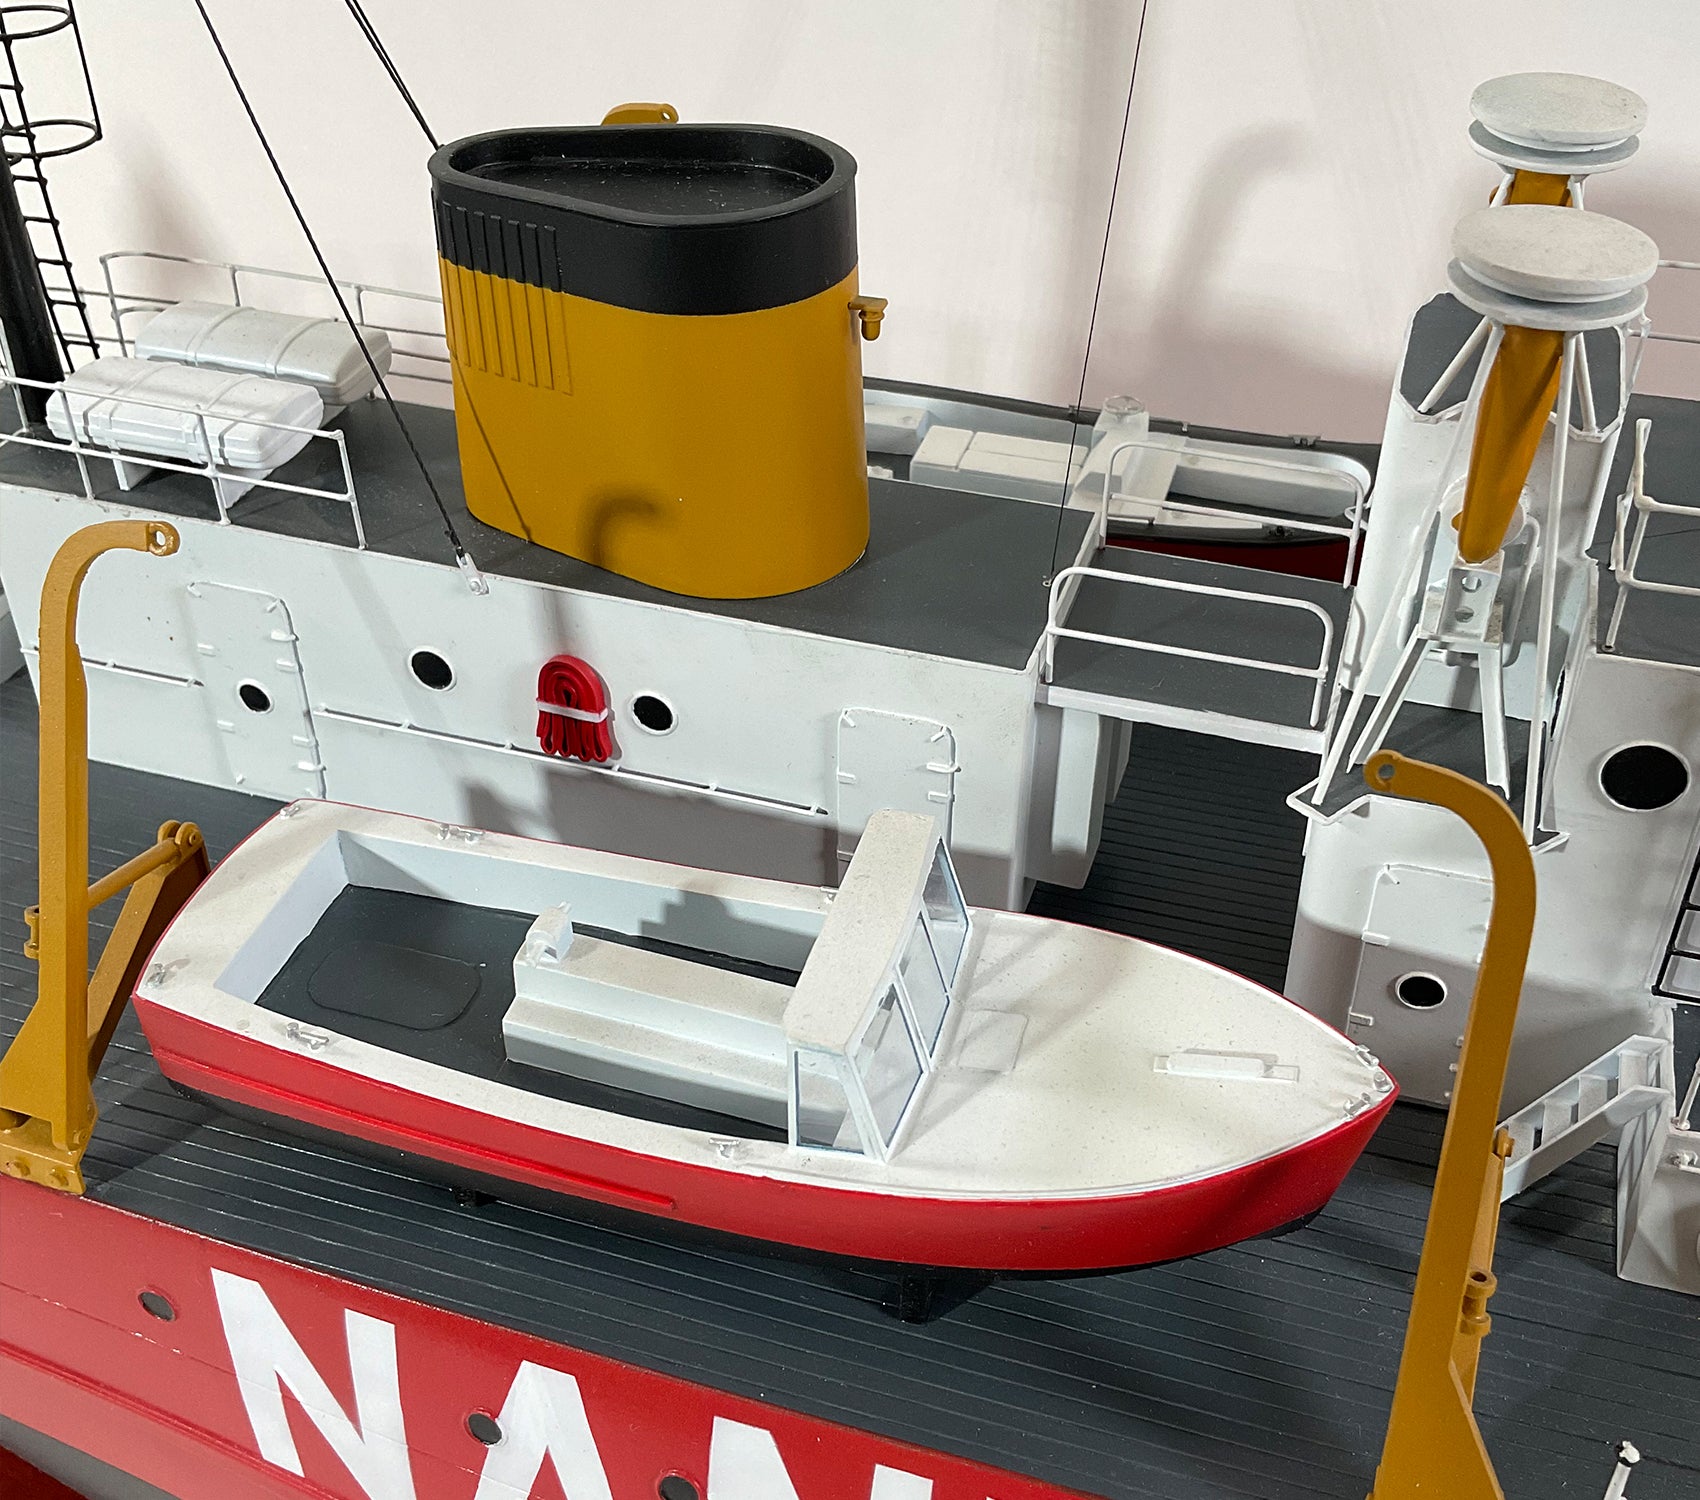 Nantucket Lightship 612 Scale Model